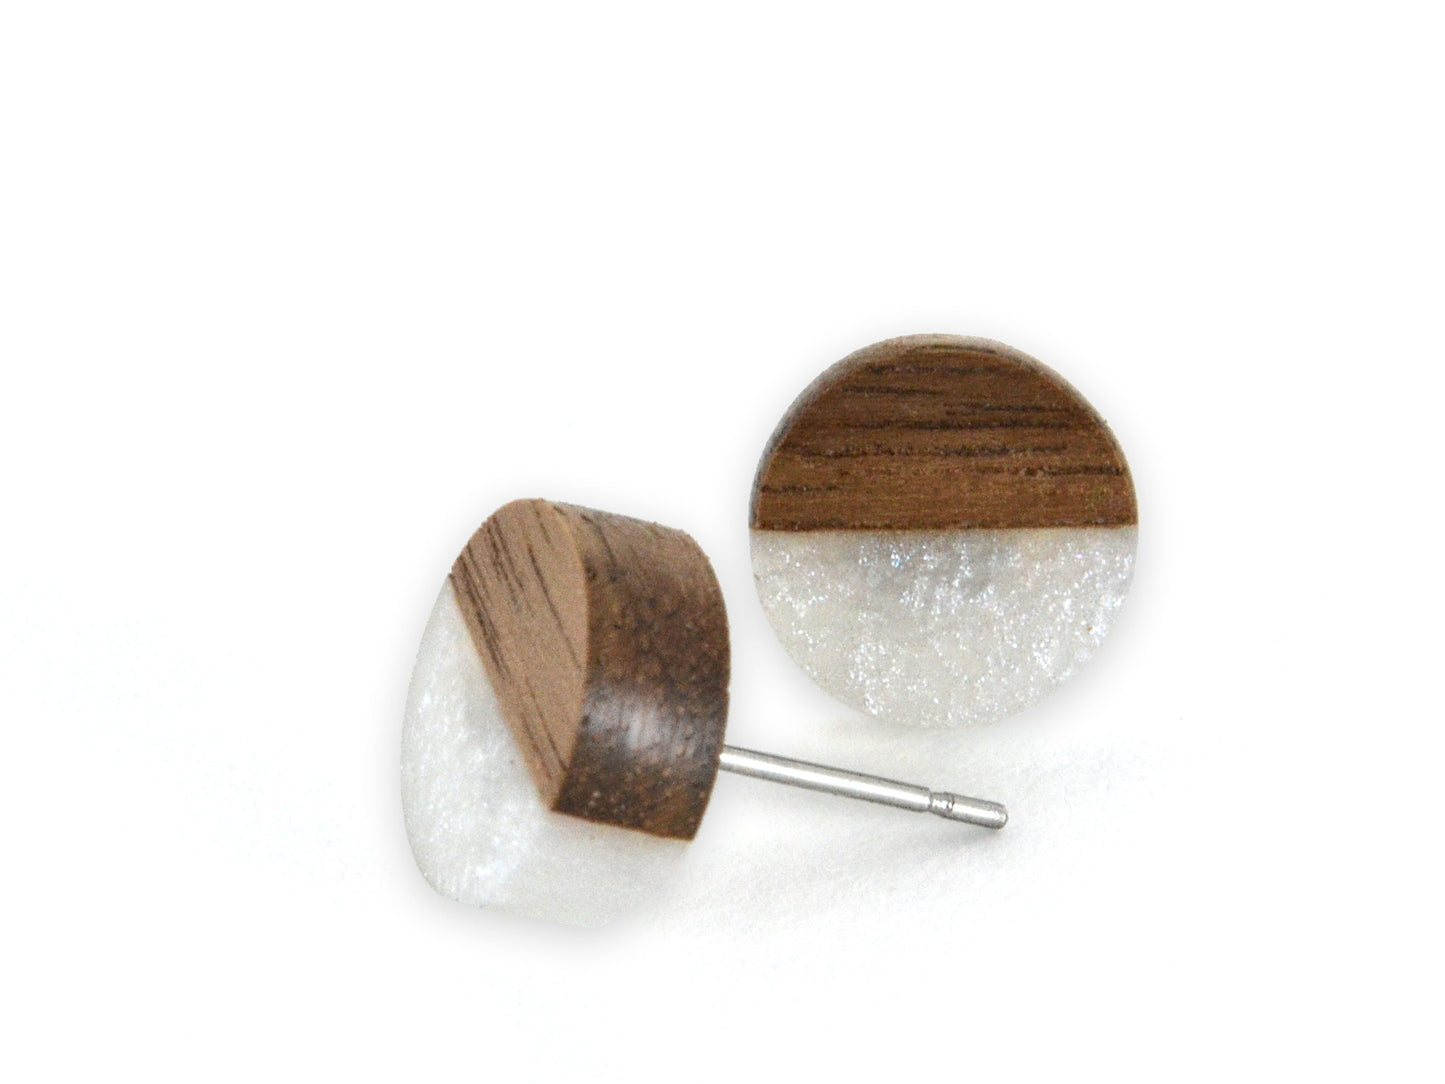 snow white epoxy earrings with walnut accent, dark walnut round wooden earring studs